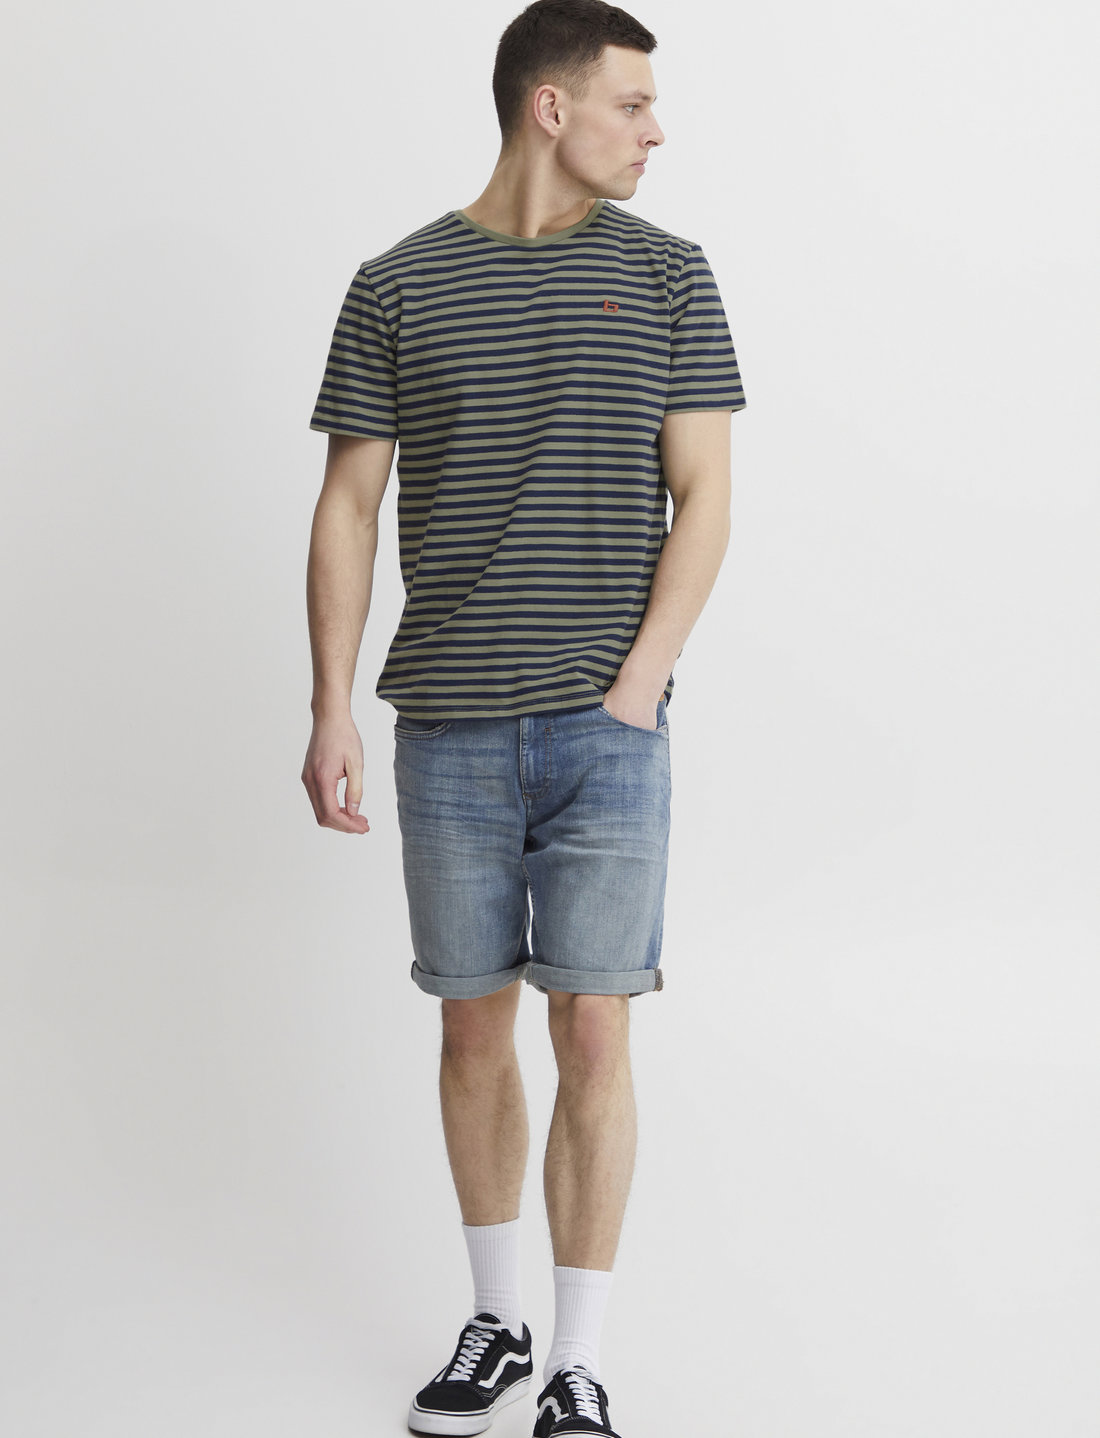 Blend Bhdinton Striped Tee - T-Shirts